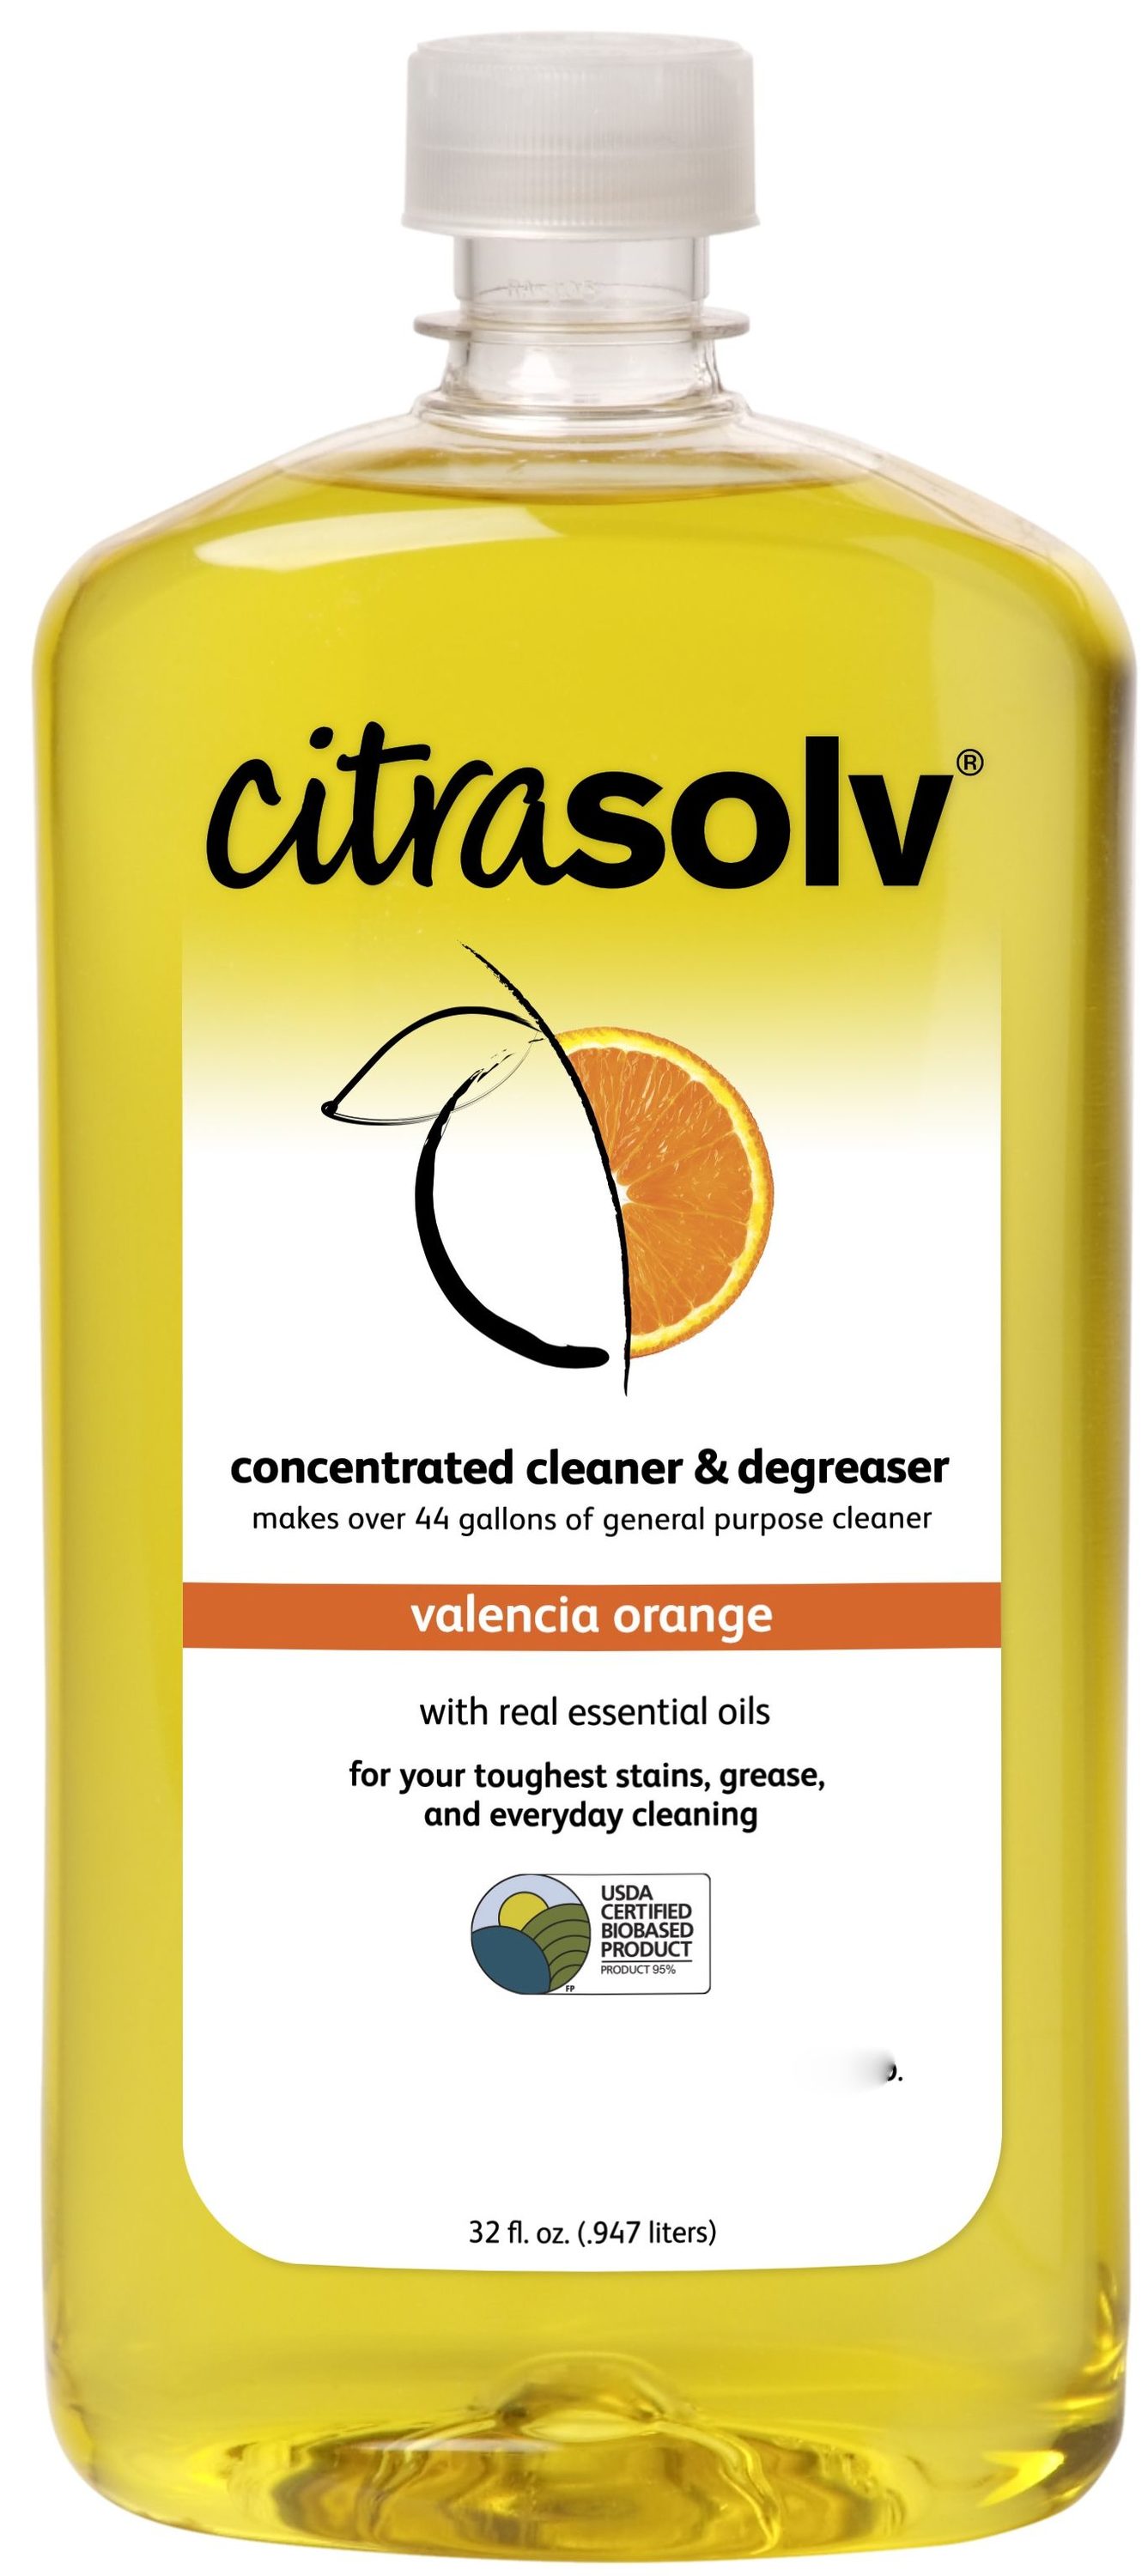 Diversey Natrasolve Citrus Solvent Cleaner/Degreaser, 1 gal, 4/Carton  (95881695)